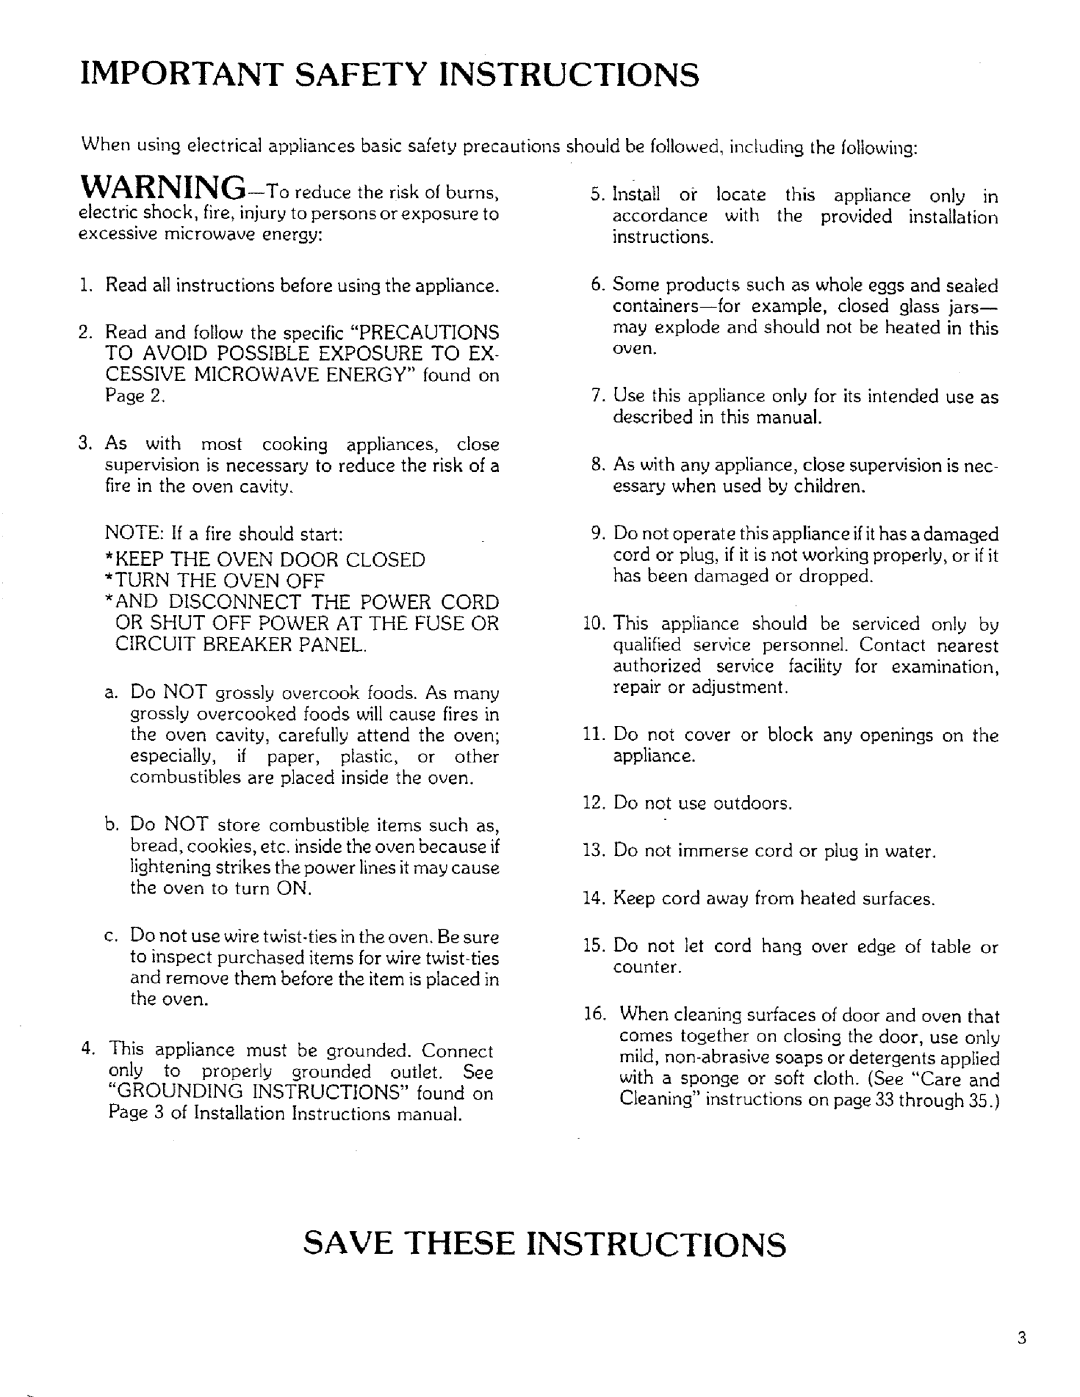 Sears 85951 manual Important Safety Instructions, Save These Instructions, WARNING-Toreducetheriskofburns 